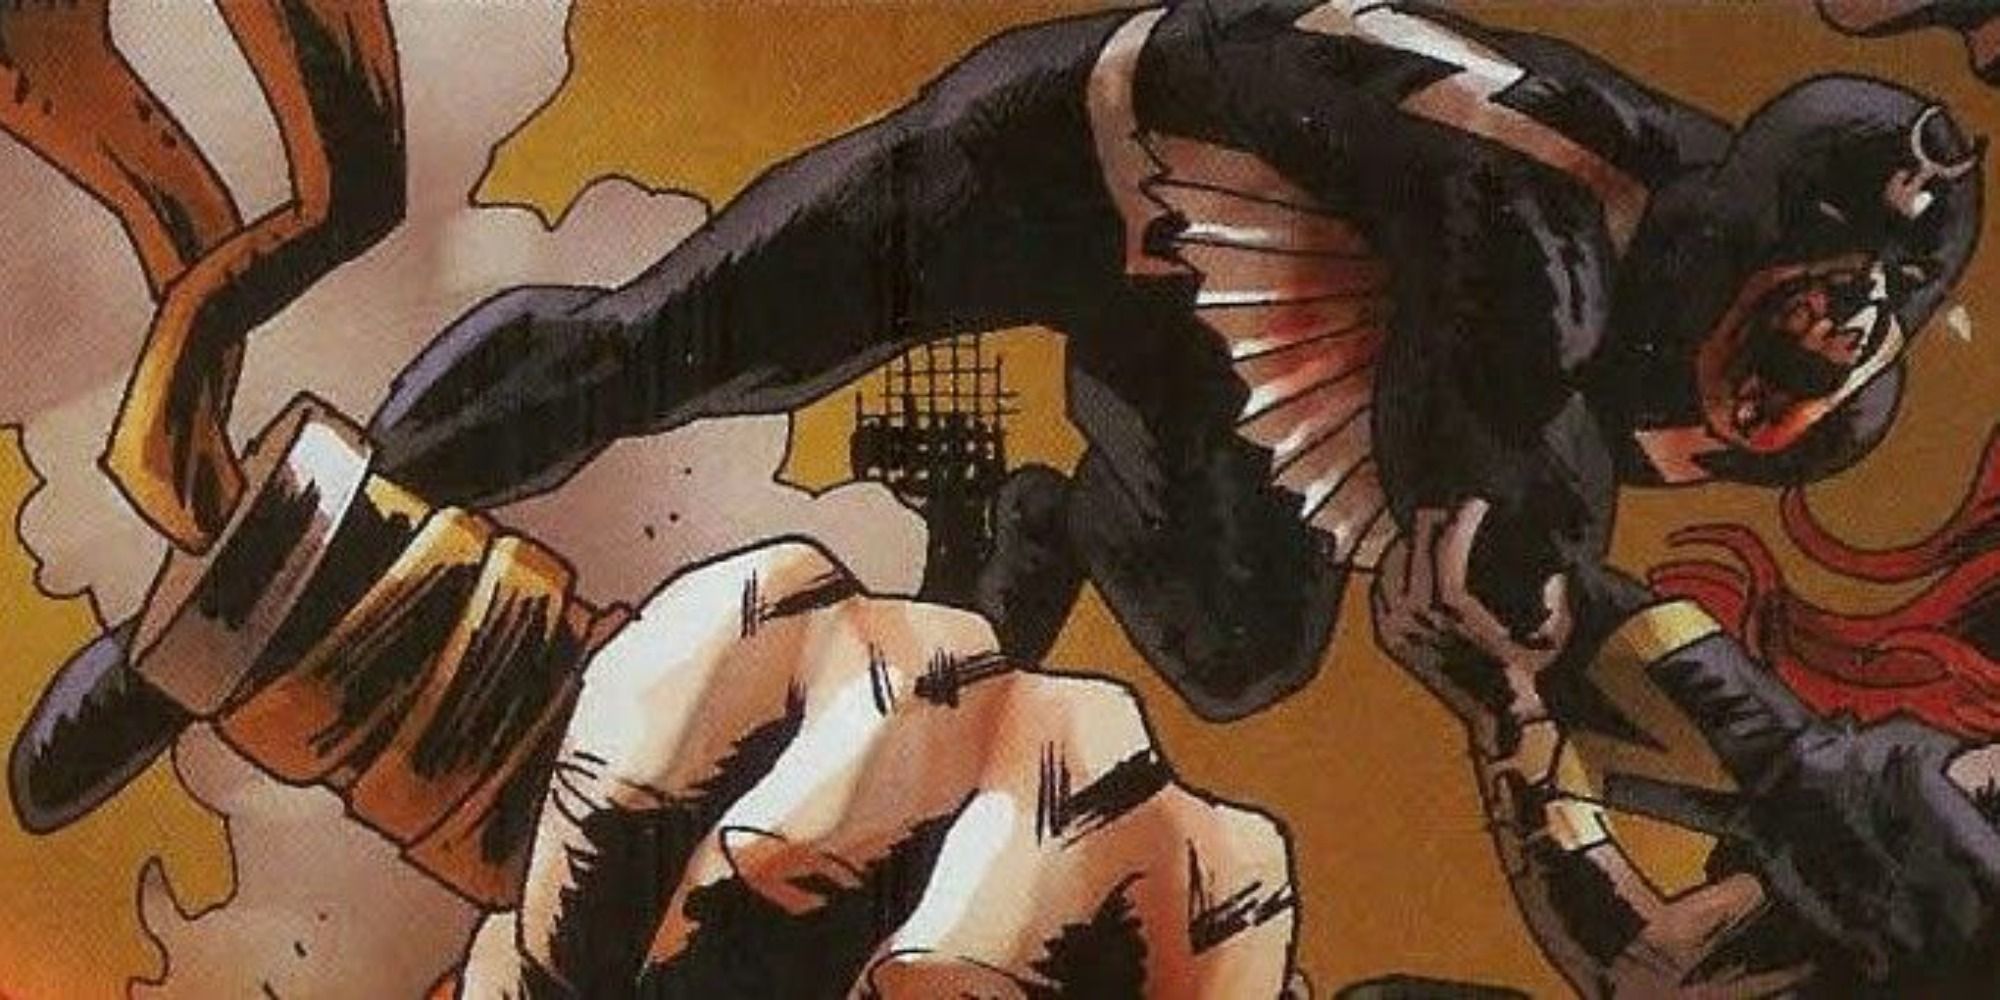 Zombie Black Bolt attacks in Marvel Comics.